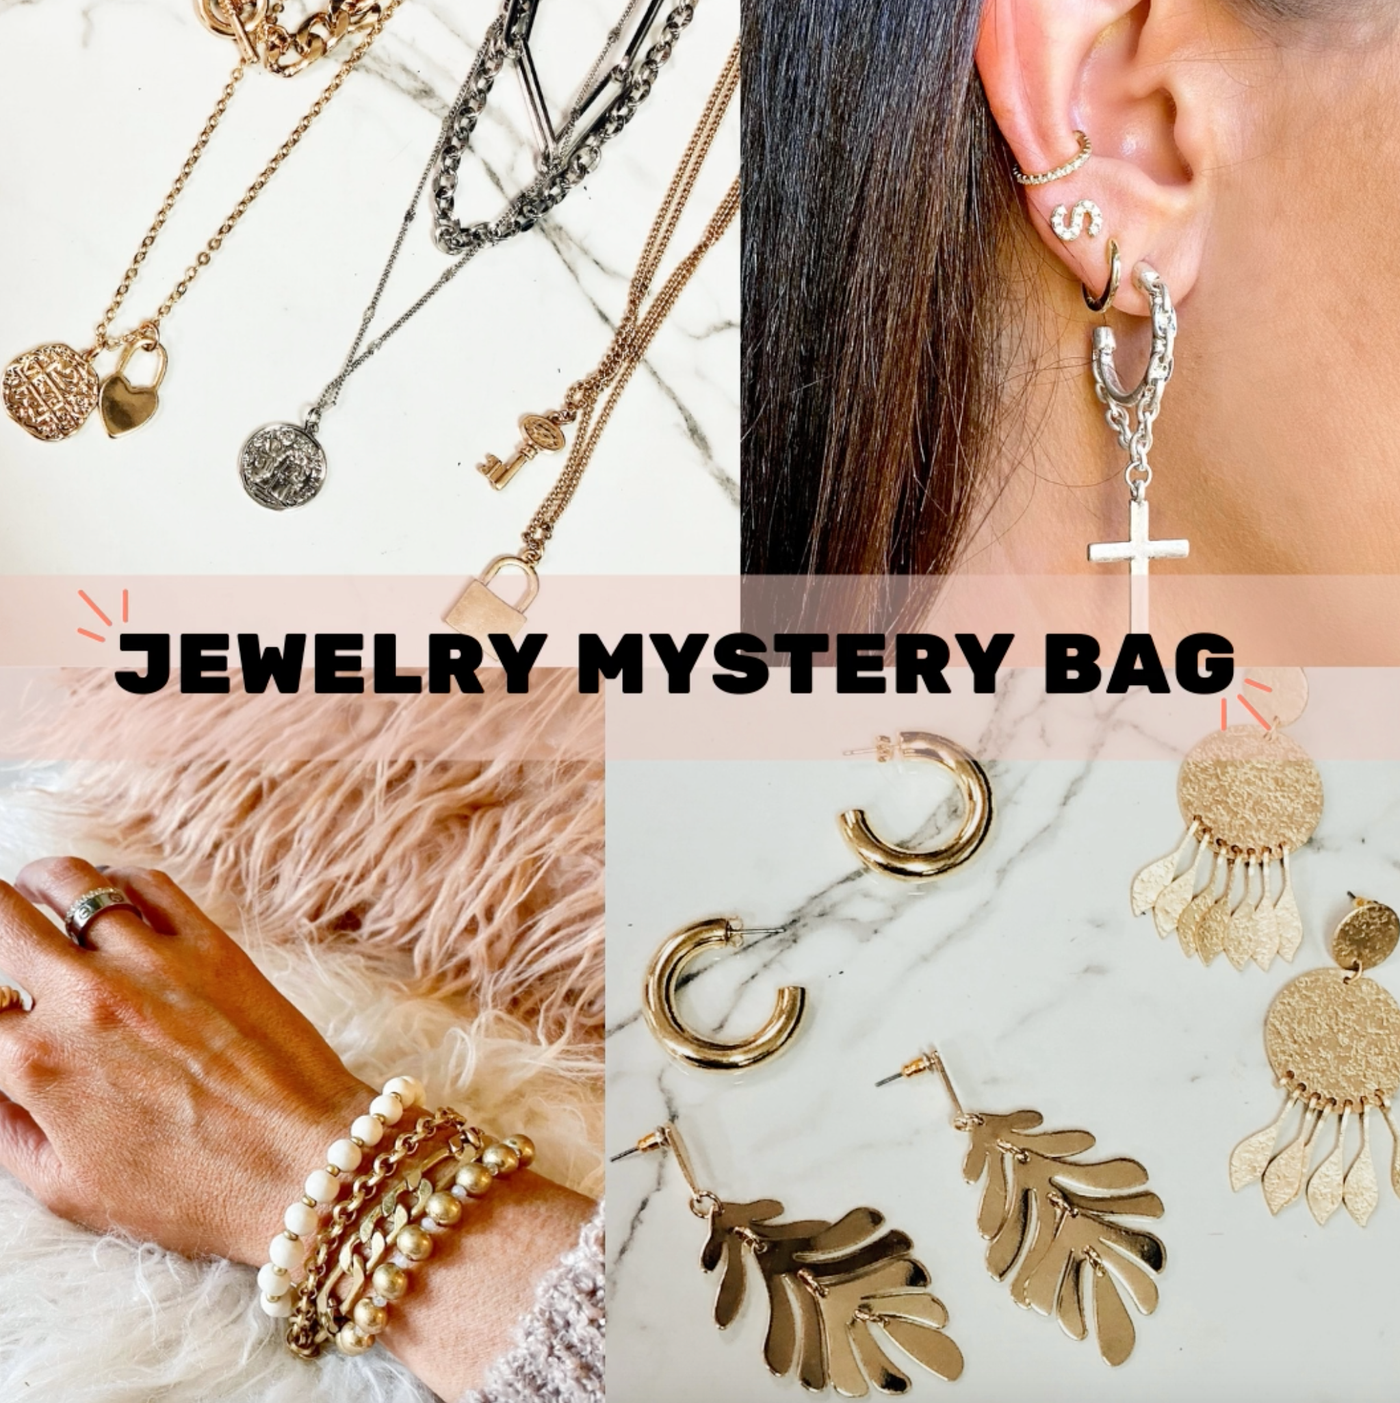  Mystery Bag - Jewelry - kitchencabinetmagic